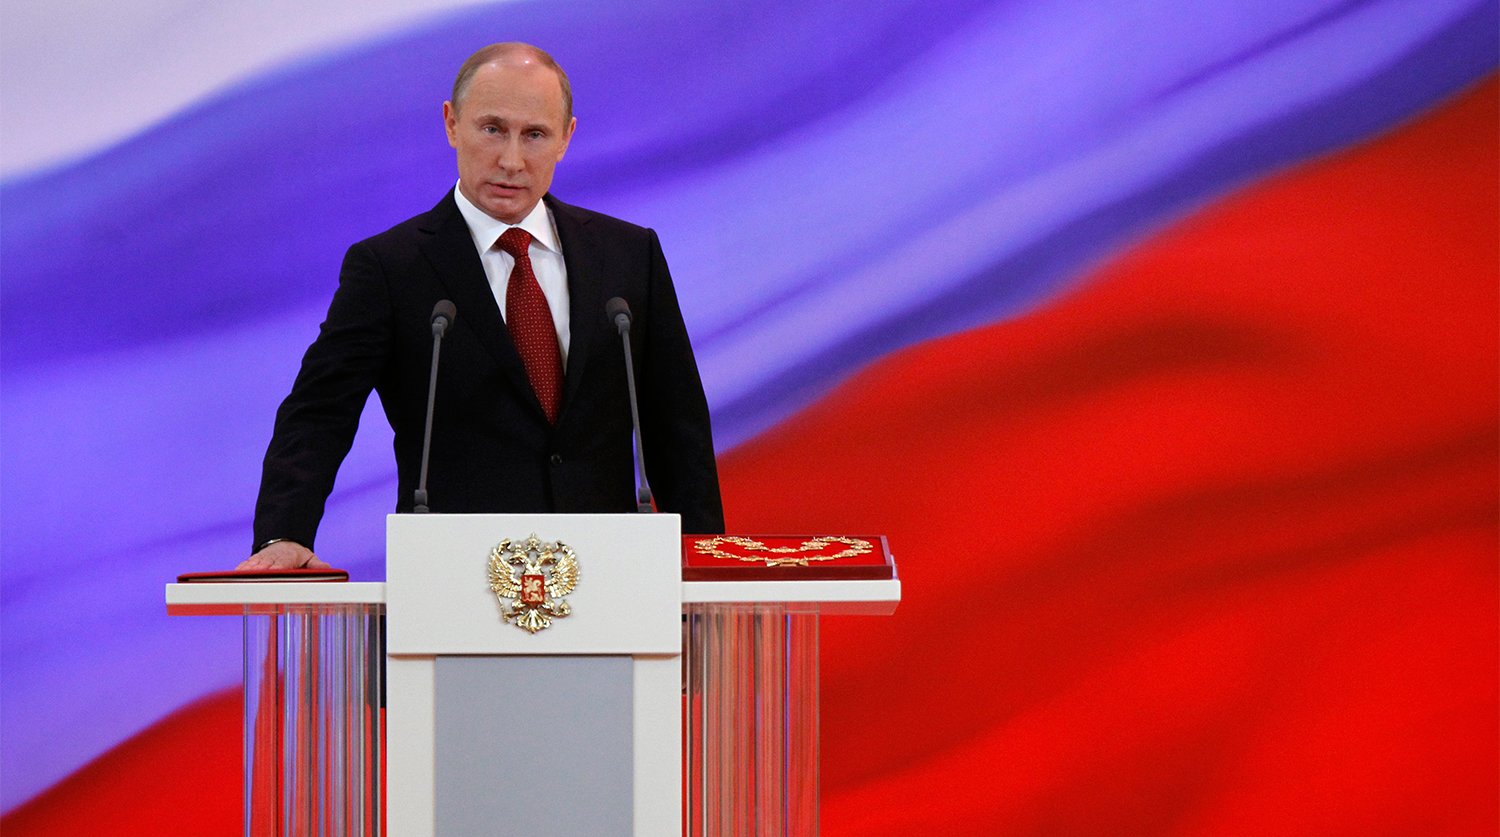 Why Putin urges constitutional reform?